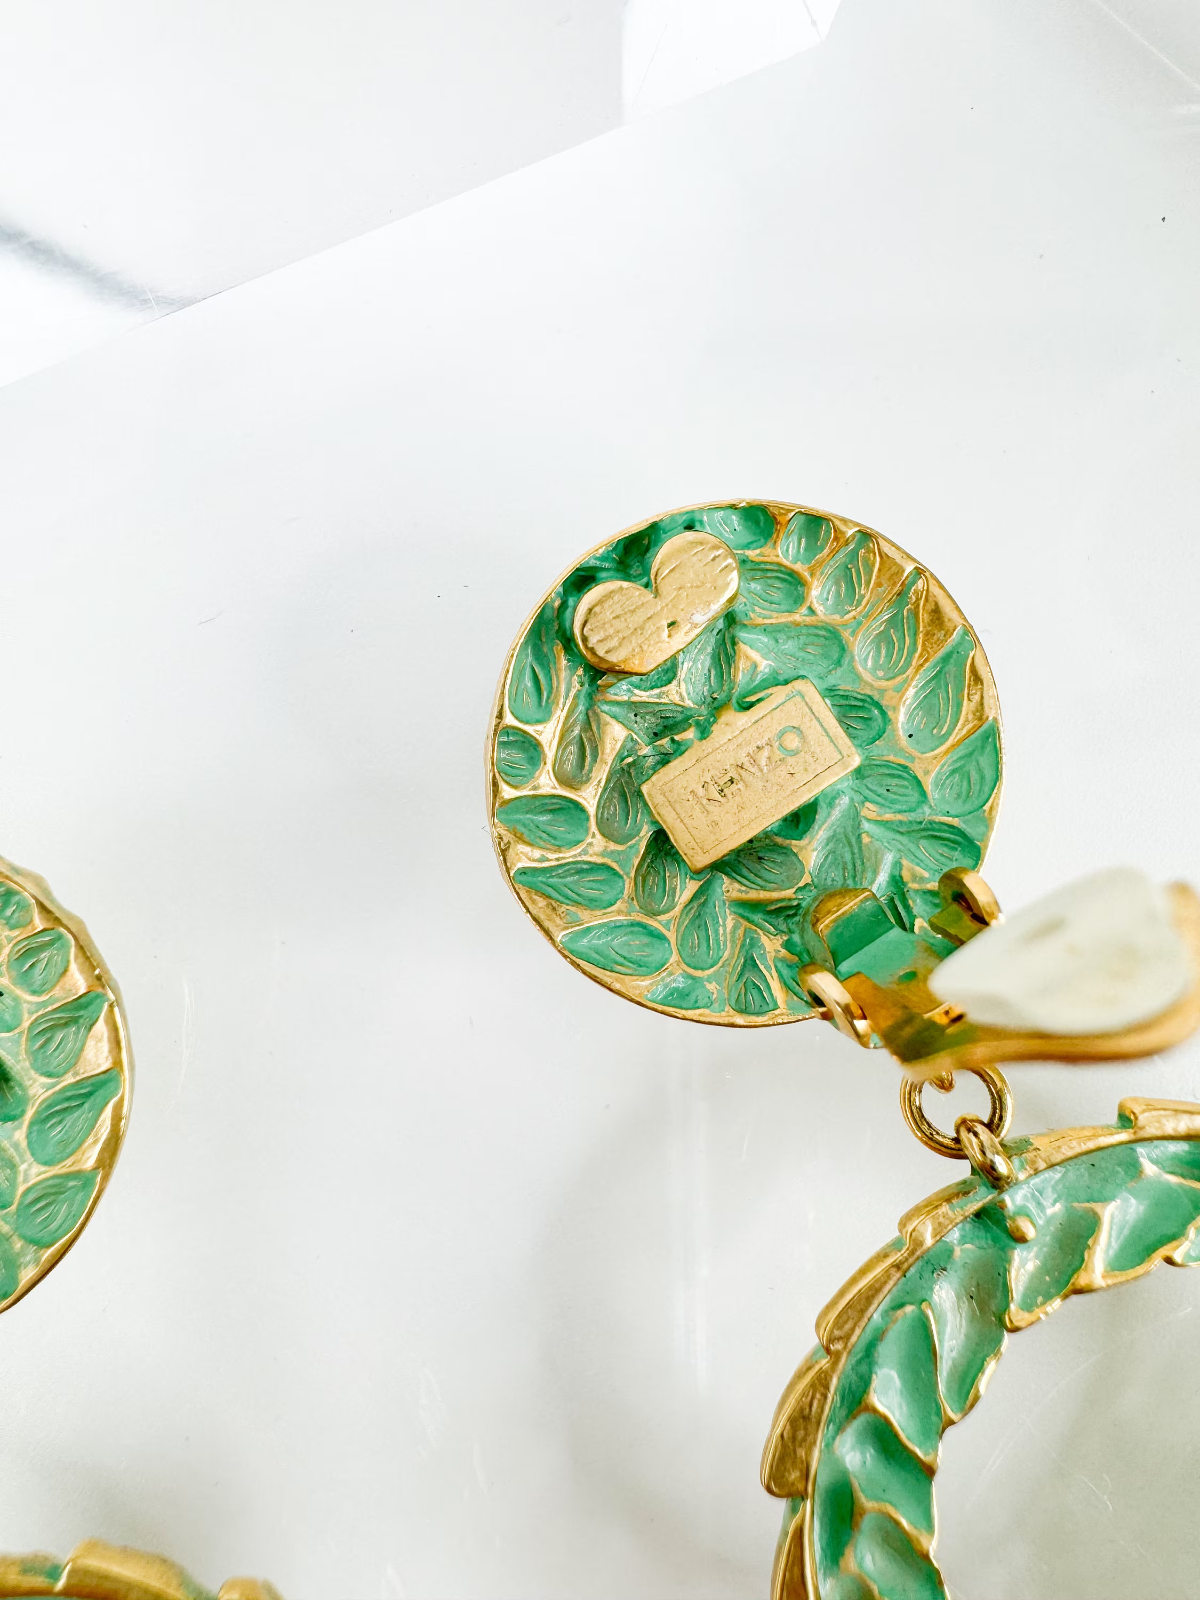 Vintage KENZO Earrings Gold, Leaf Earrings, Dangle Earrings, wheat Earrings, Green Earrings, Jewelry for Women, Gift for her, Earrings Large